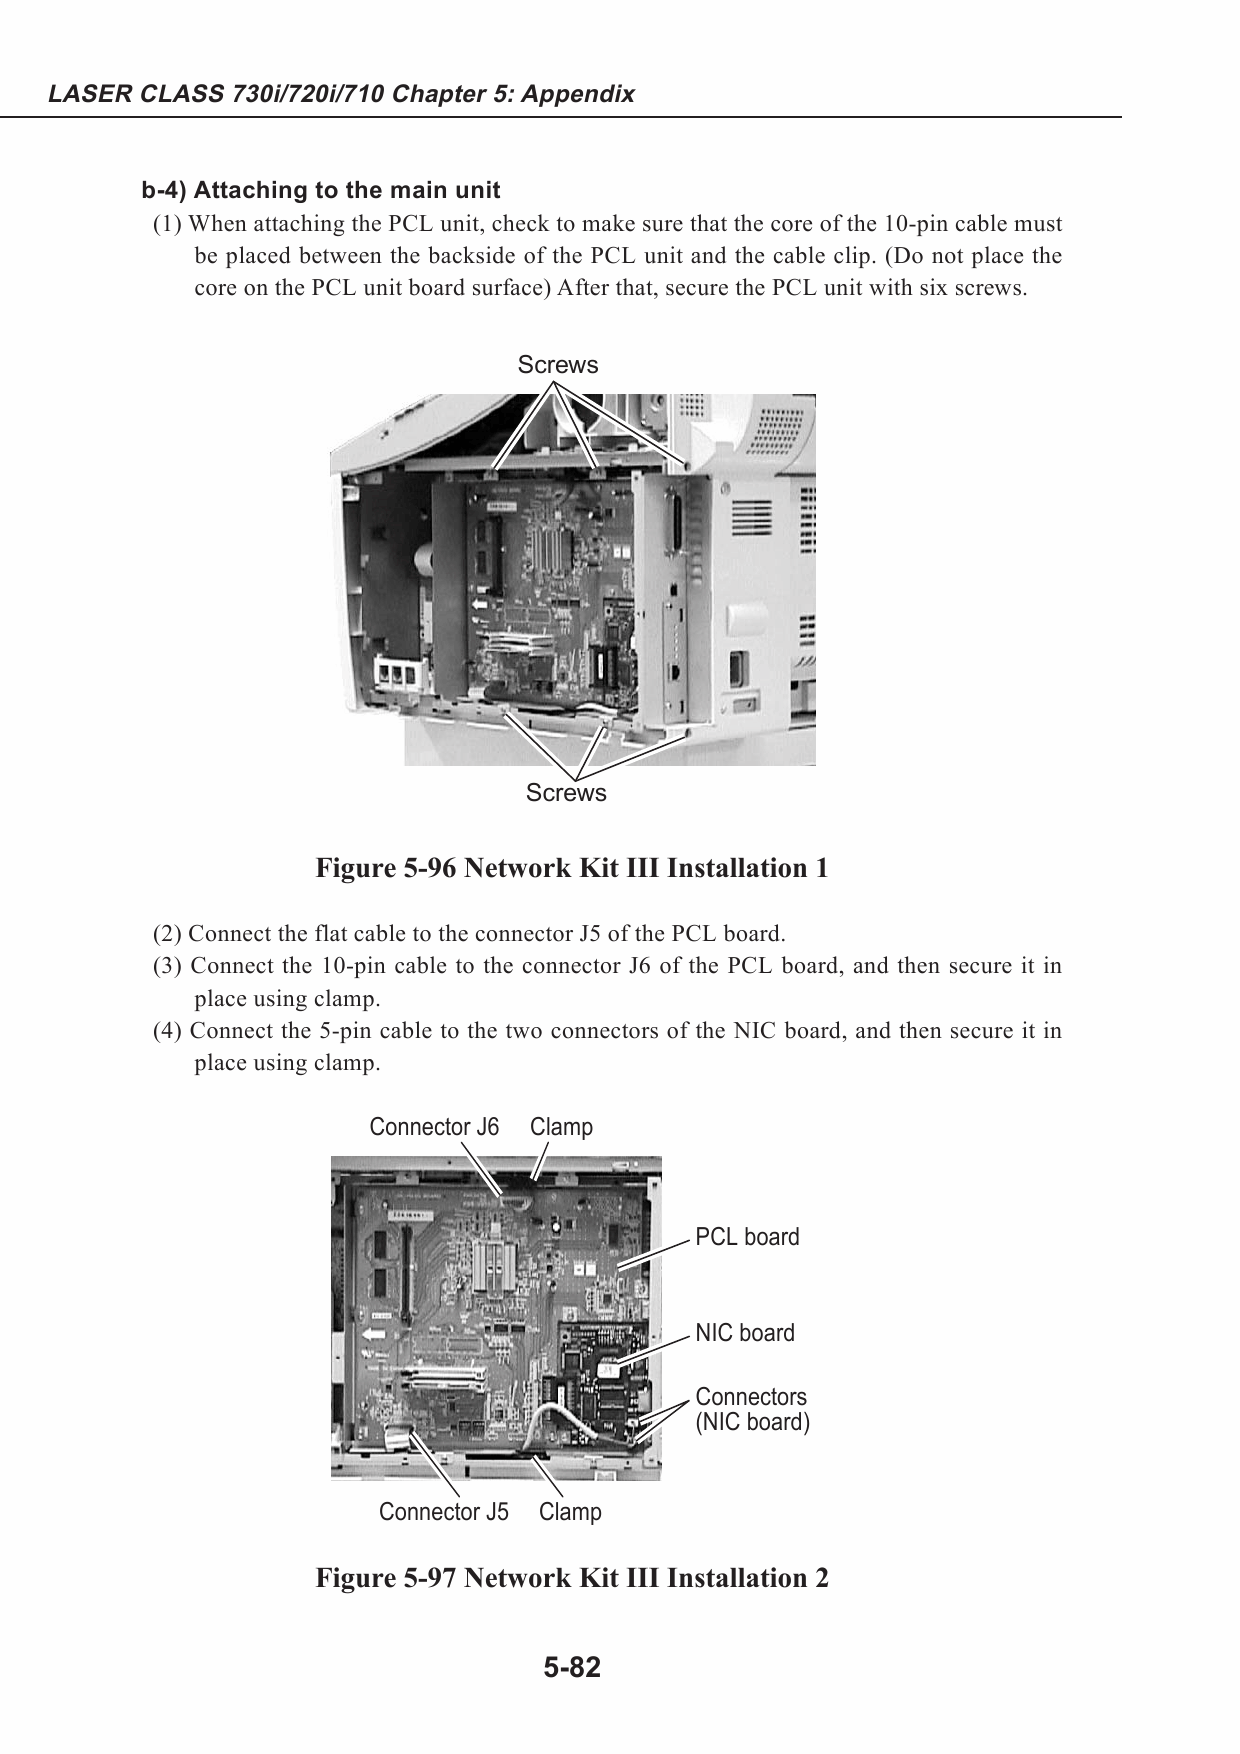 Canon imageCLASS LBP-730i 720i 710 Parts and Service Manual-5